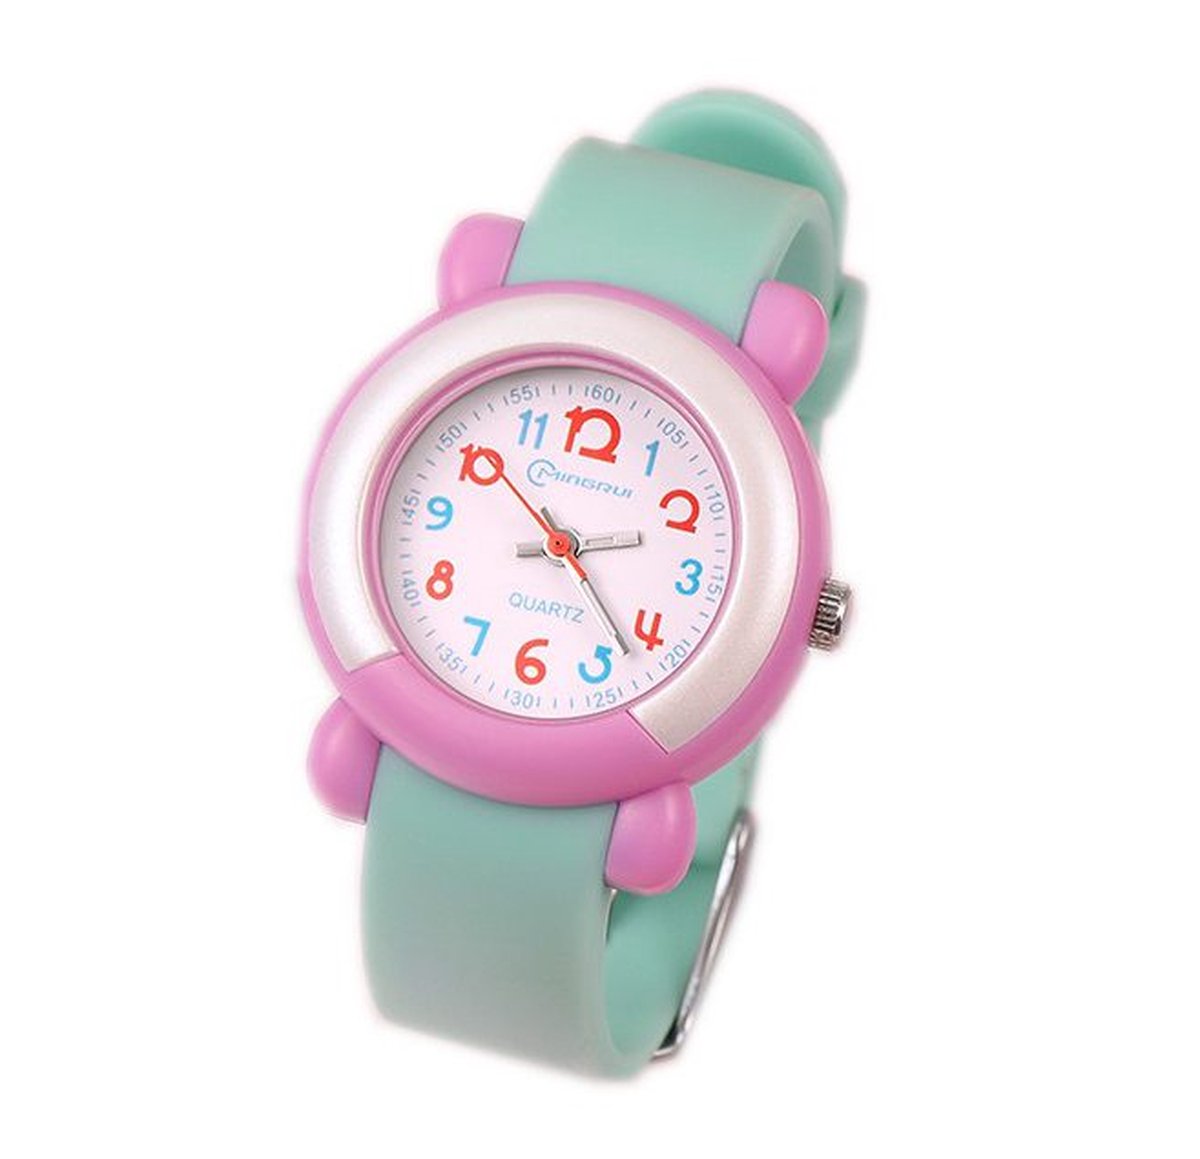 Horloge Kind - Horloge Meisjes - Kinderhorloge - Roze Groen